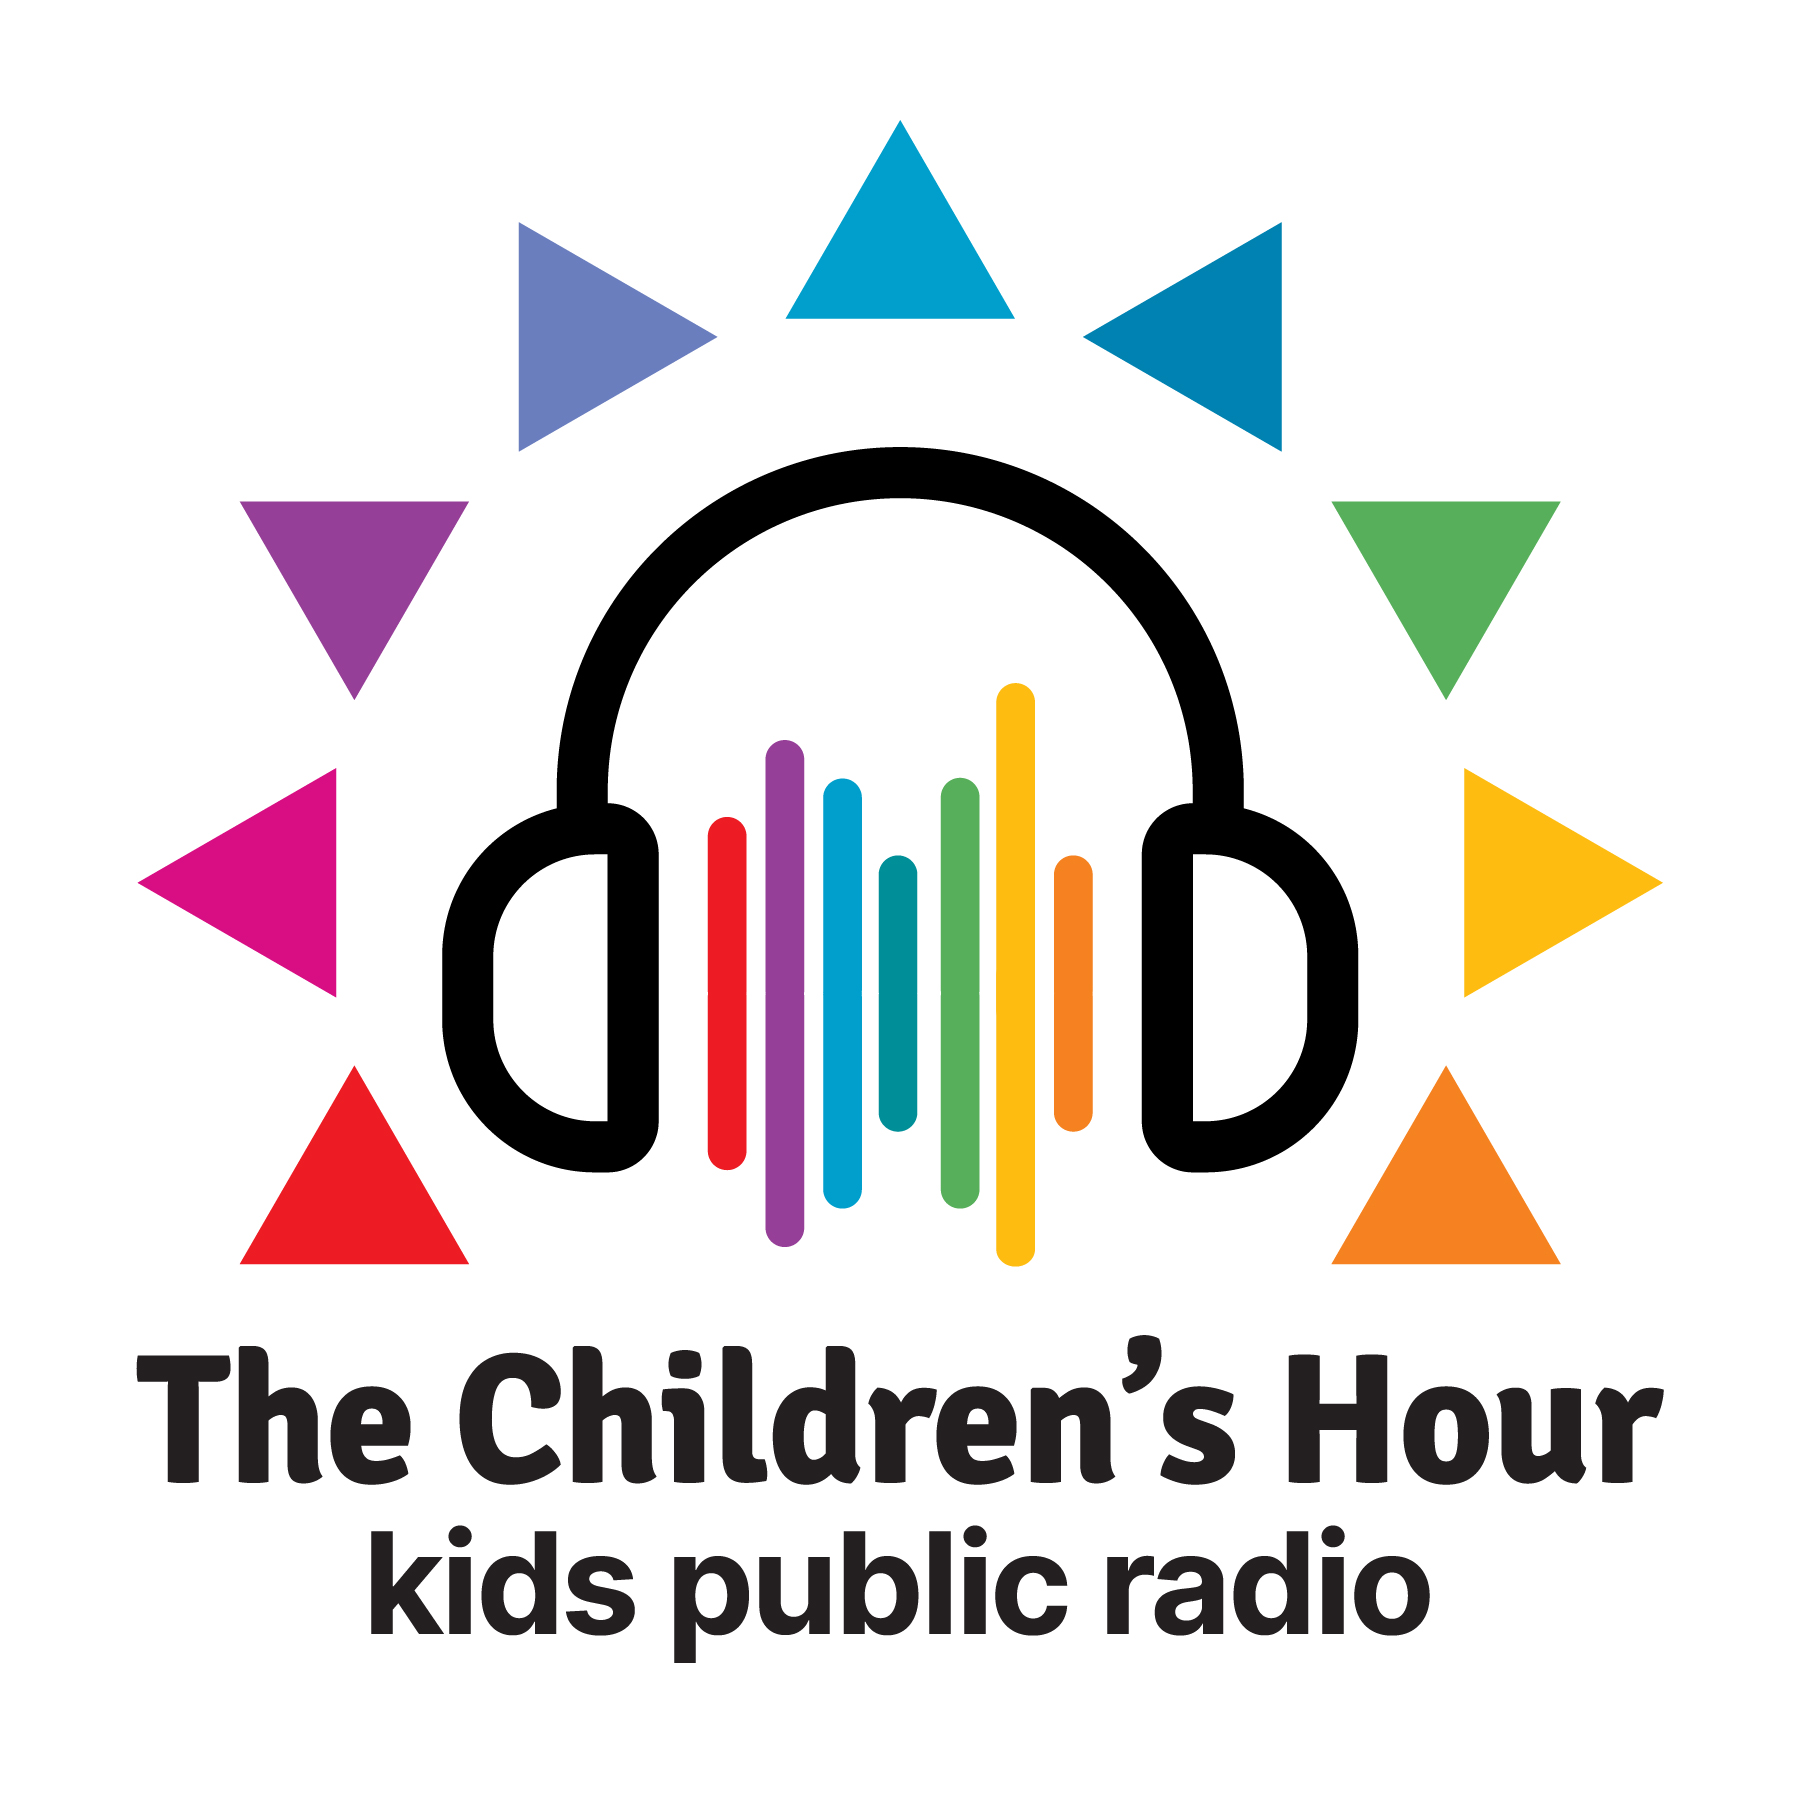 Listen: The Children's Hour